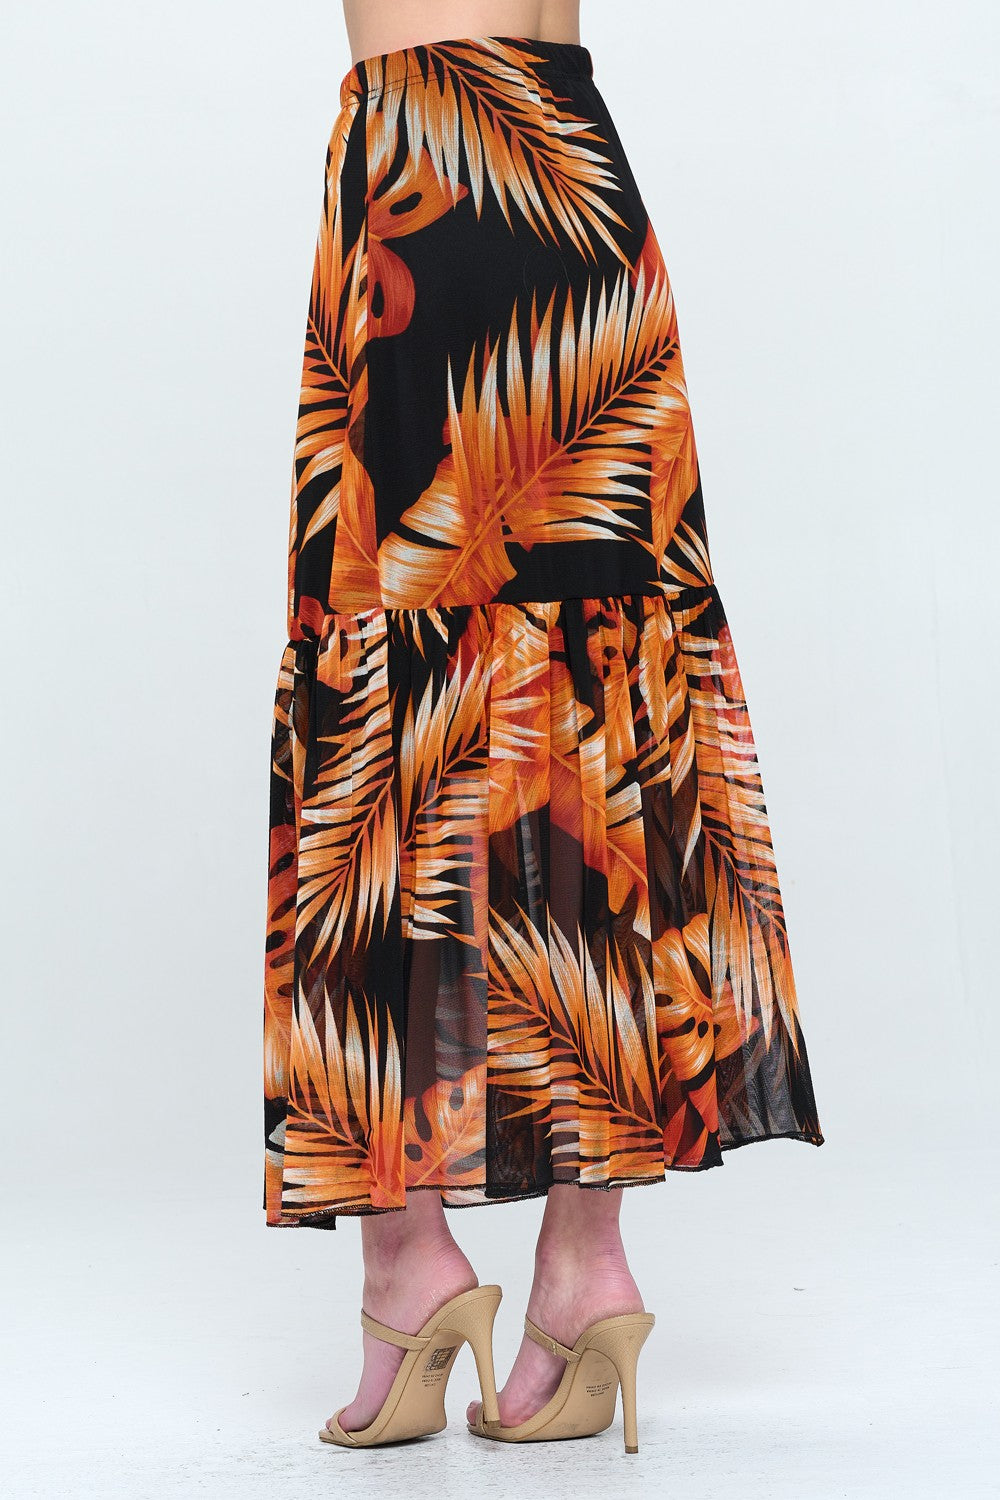 Mesh Romance Tiered Print Skirt-6044MR-ARP1-W340